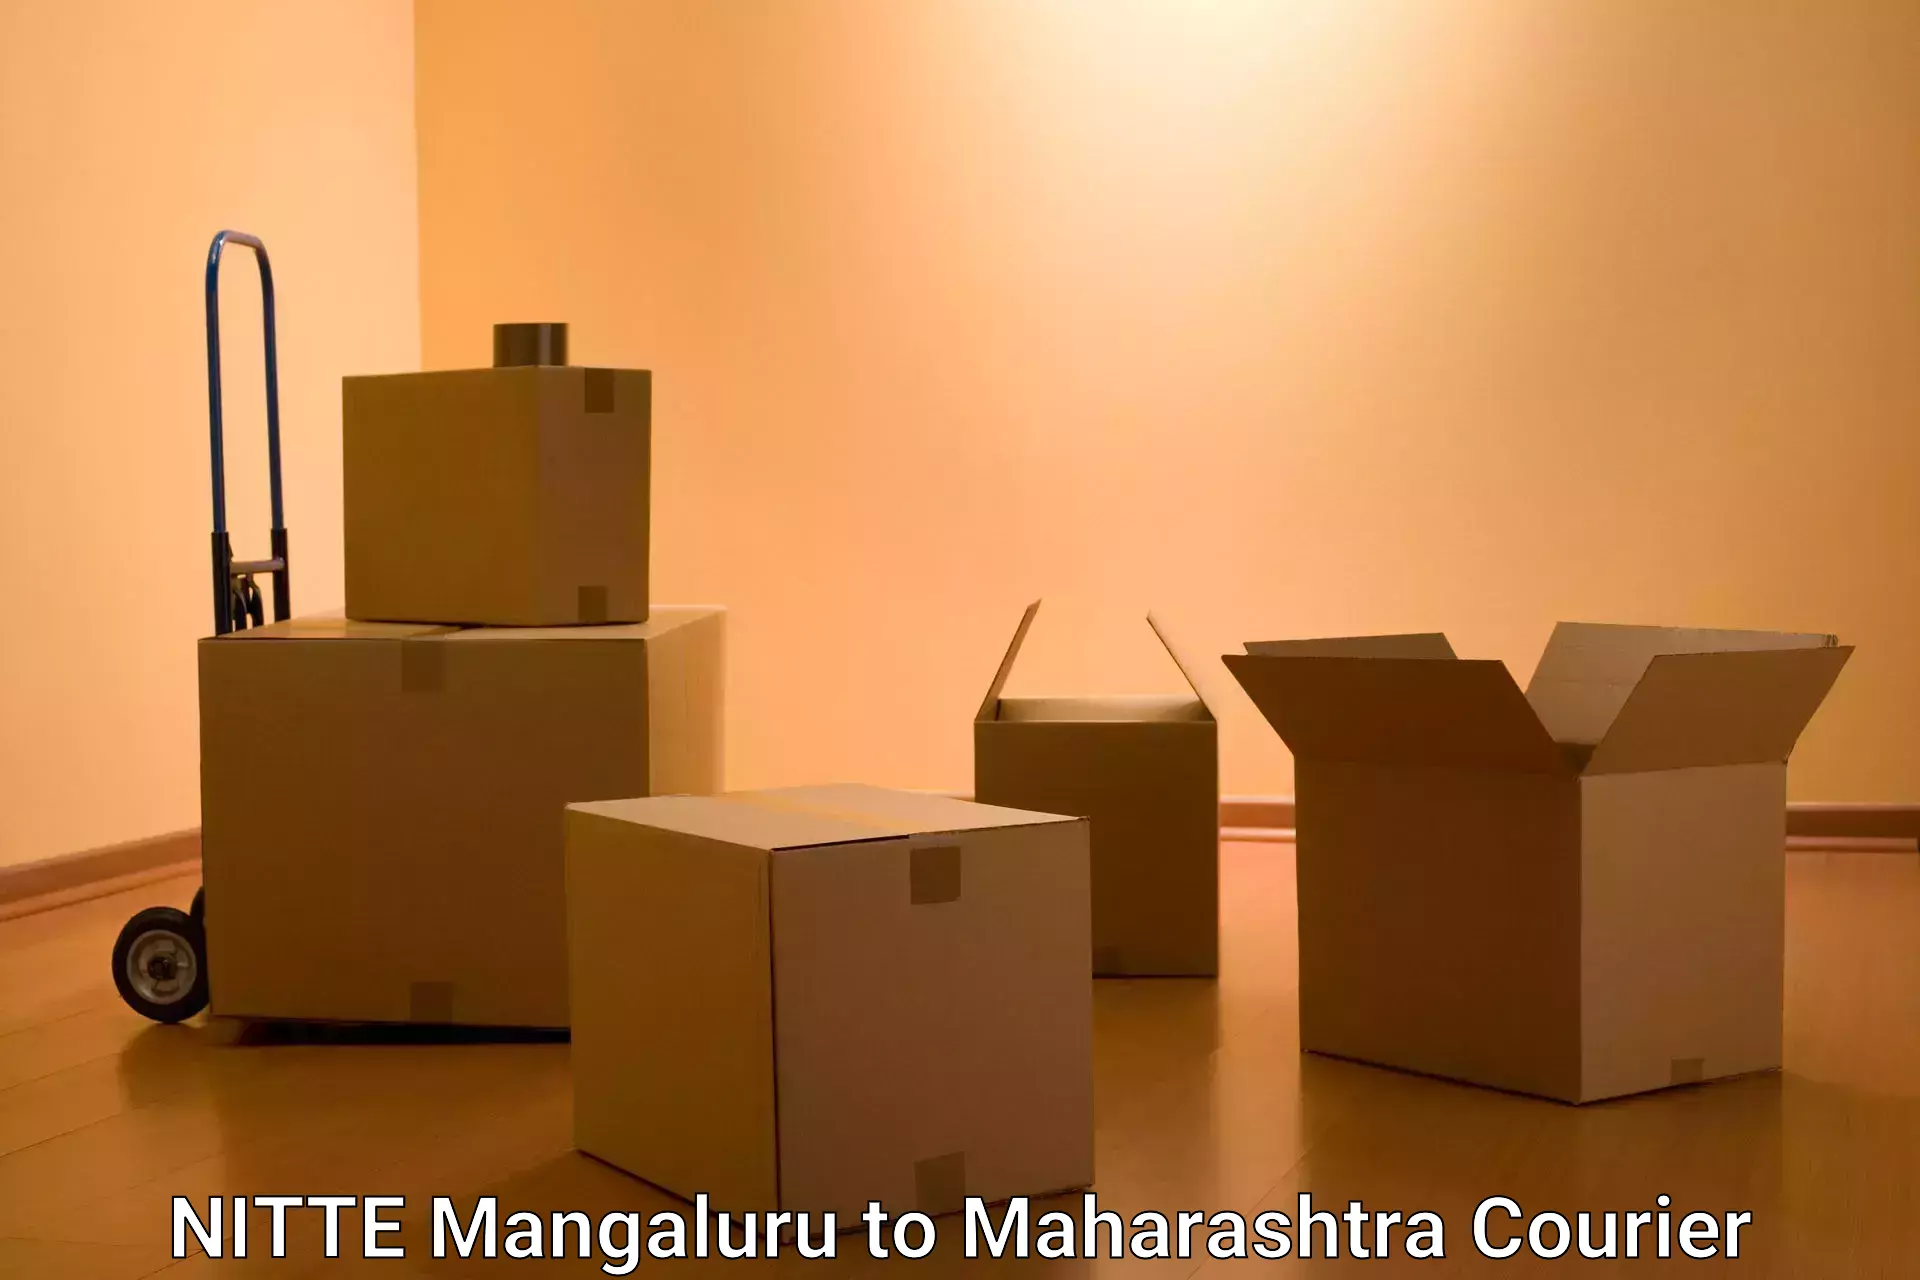 Express postal services NITTE Mangaluru to Maharashtra